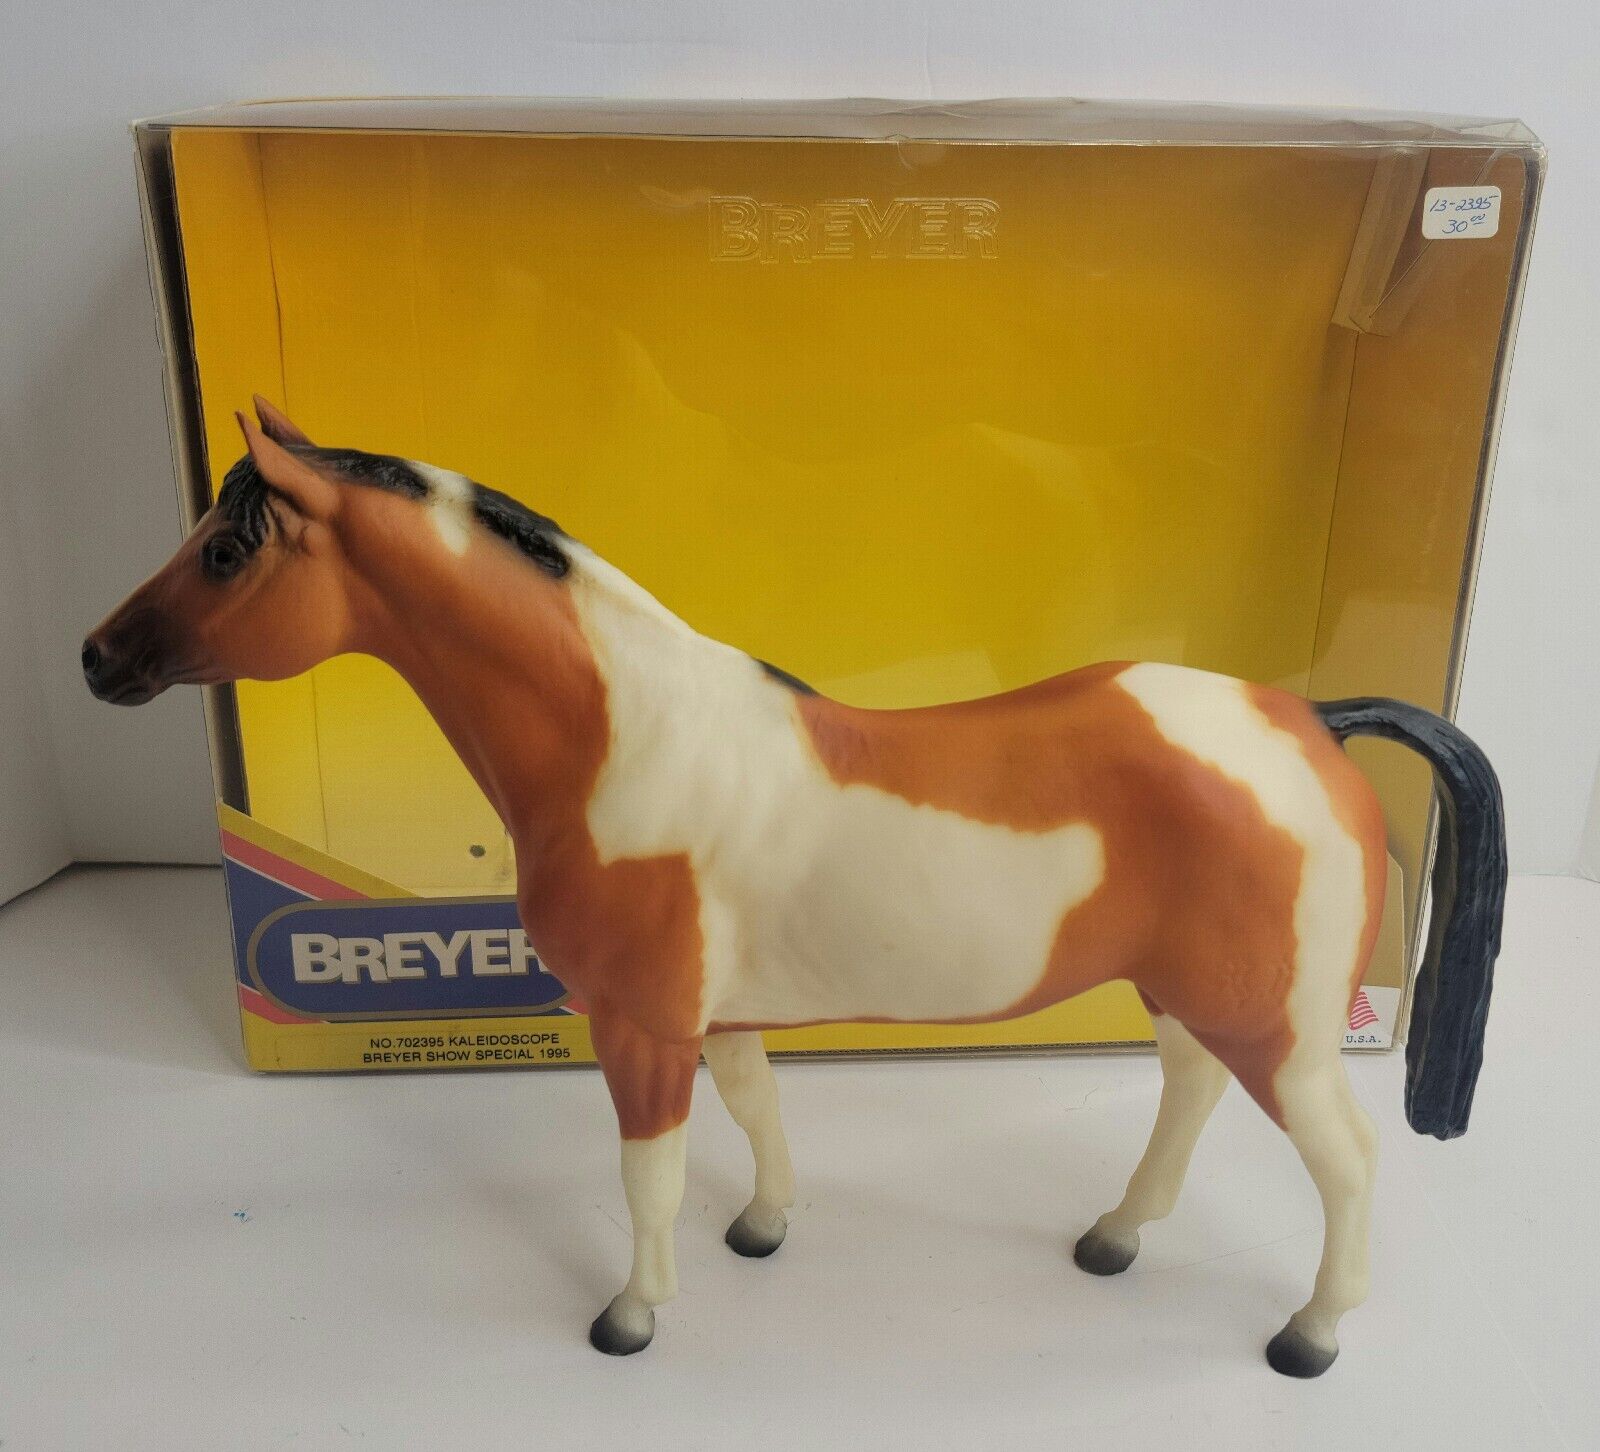 Breyer Horse 702395 Kaleidoscope Breyer Show Special 1995 Equistrian